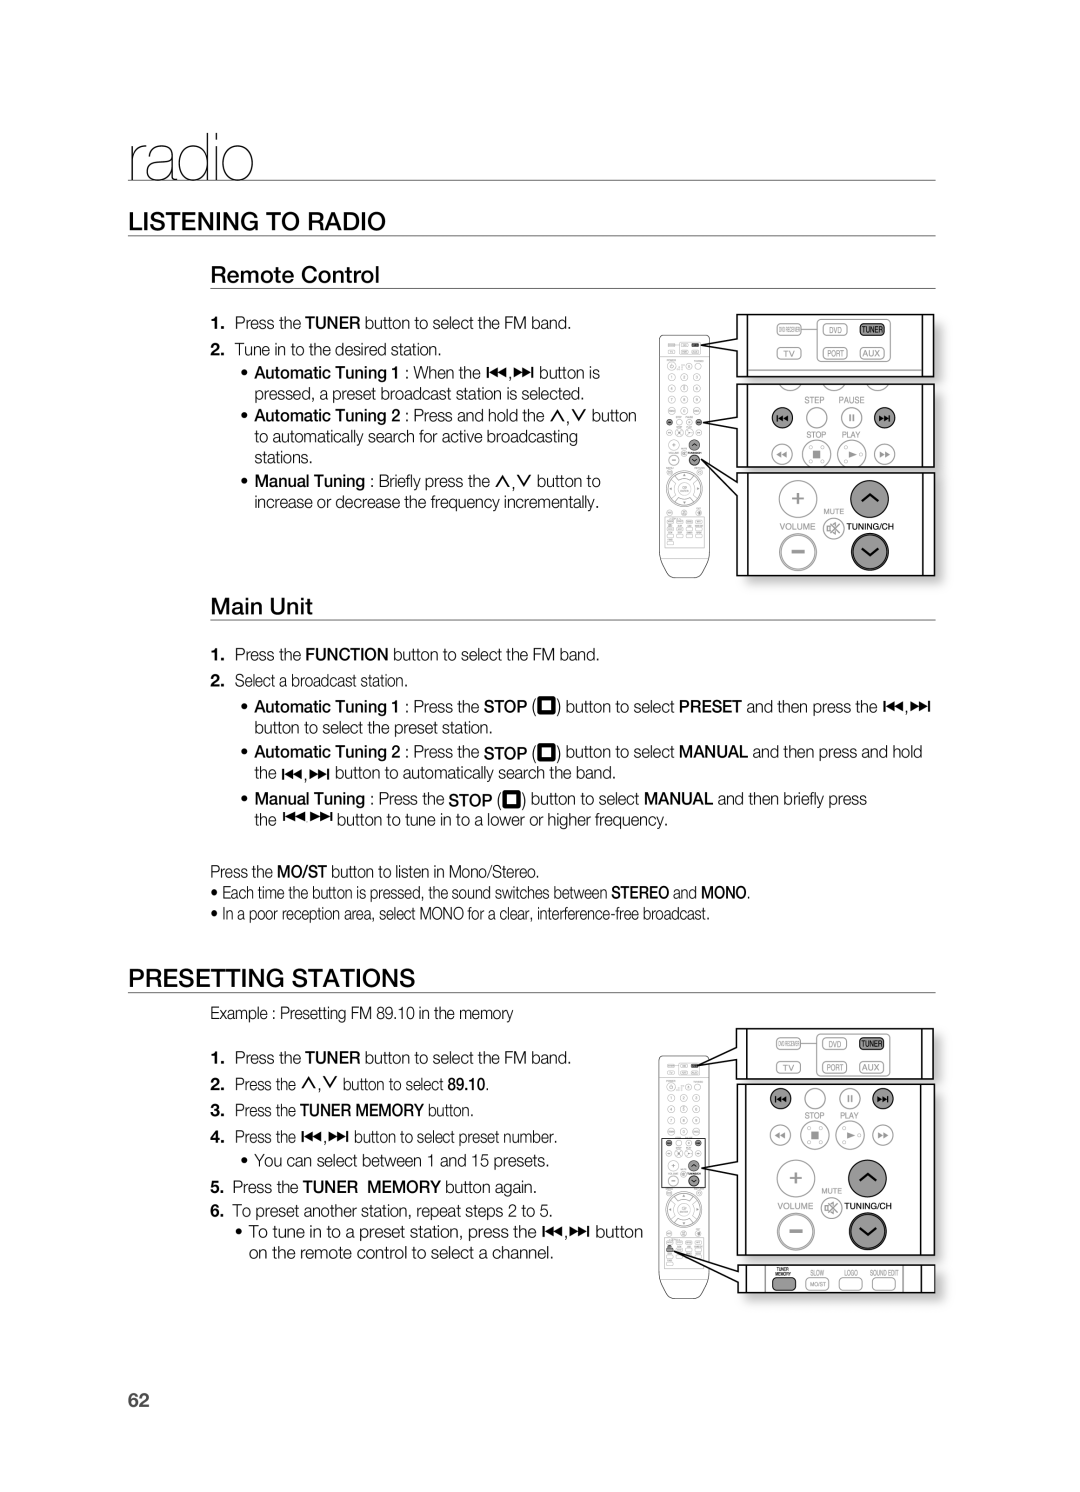 Samsung HT-TZ312, HT-Z310 manual radio, LiStEninG tO raDiO, PrESEttinG StatiOnS, remote Control, main Unit 